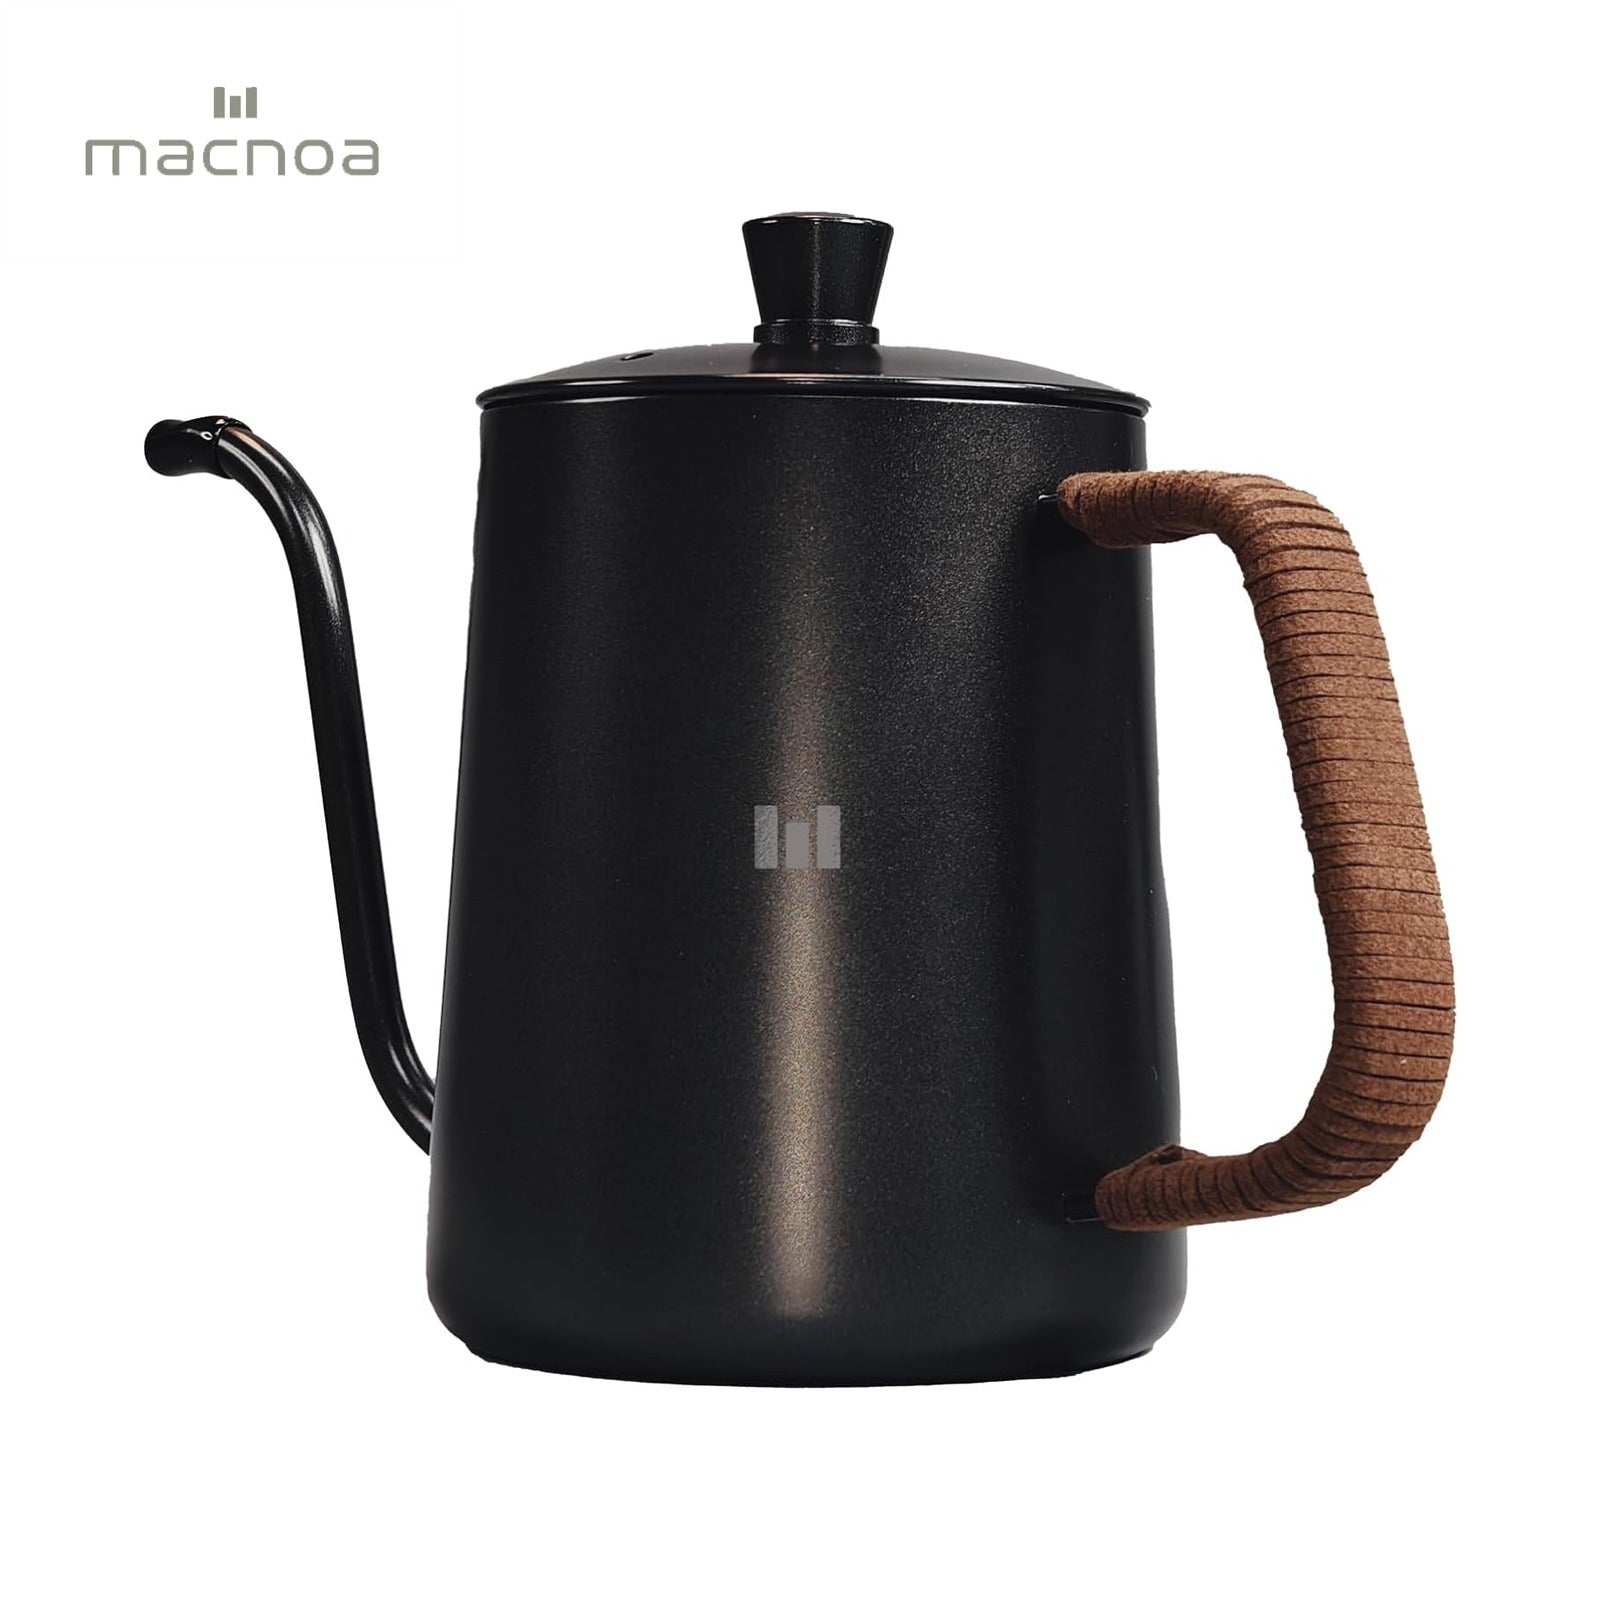 Macnoa Coffee Pot